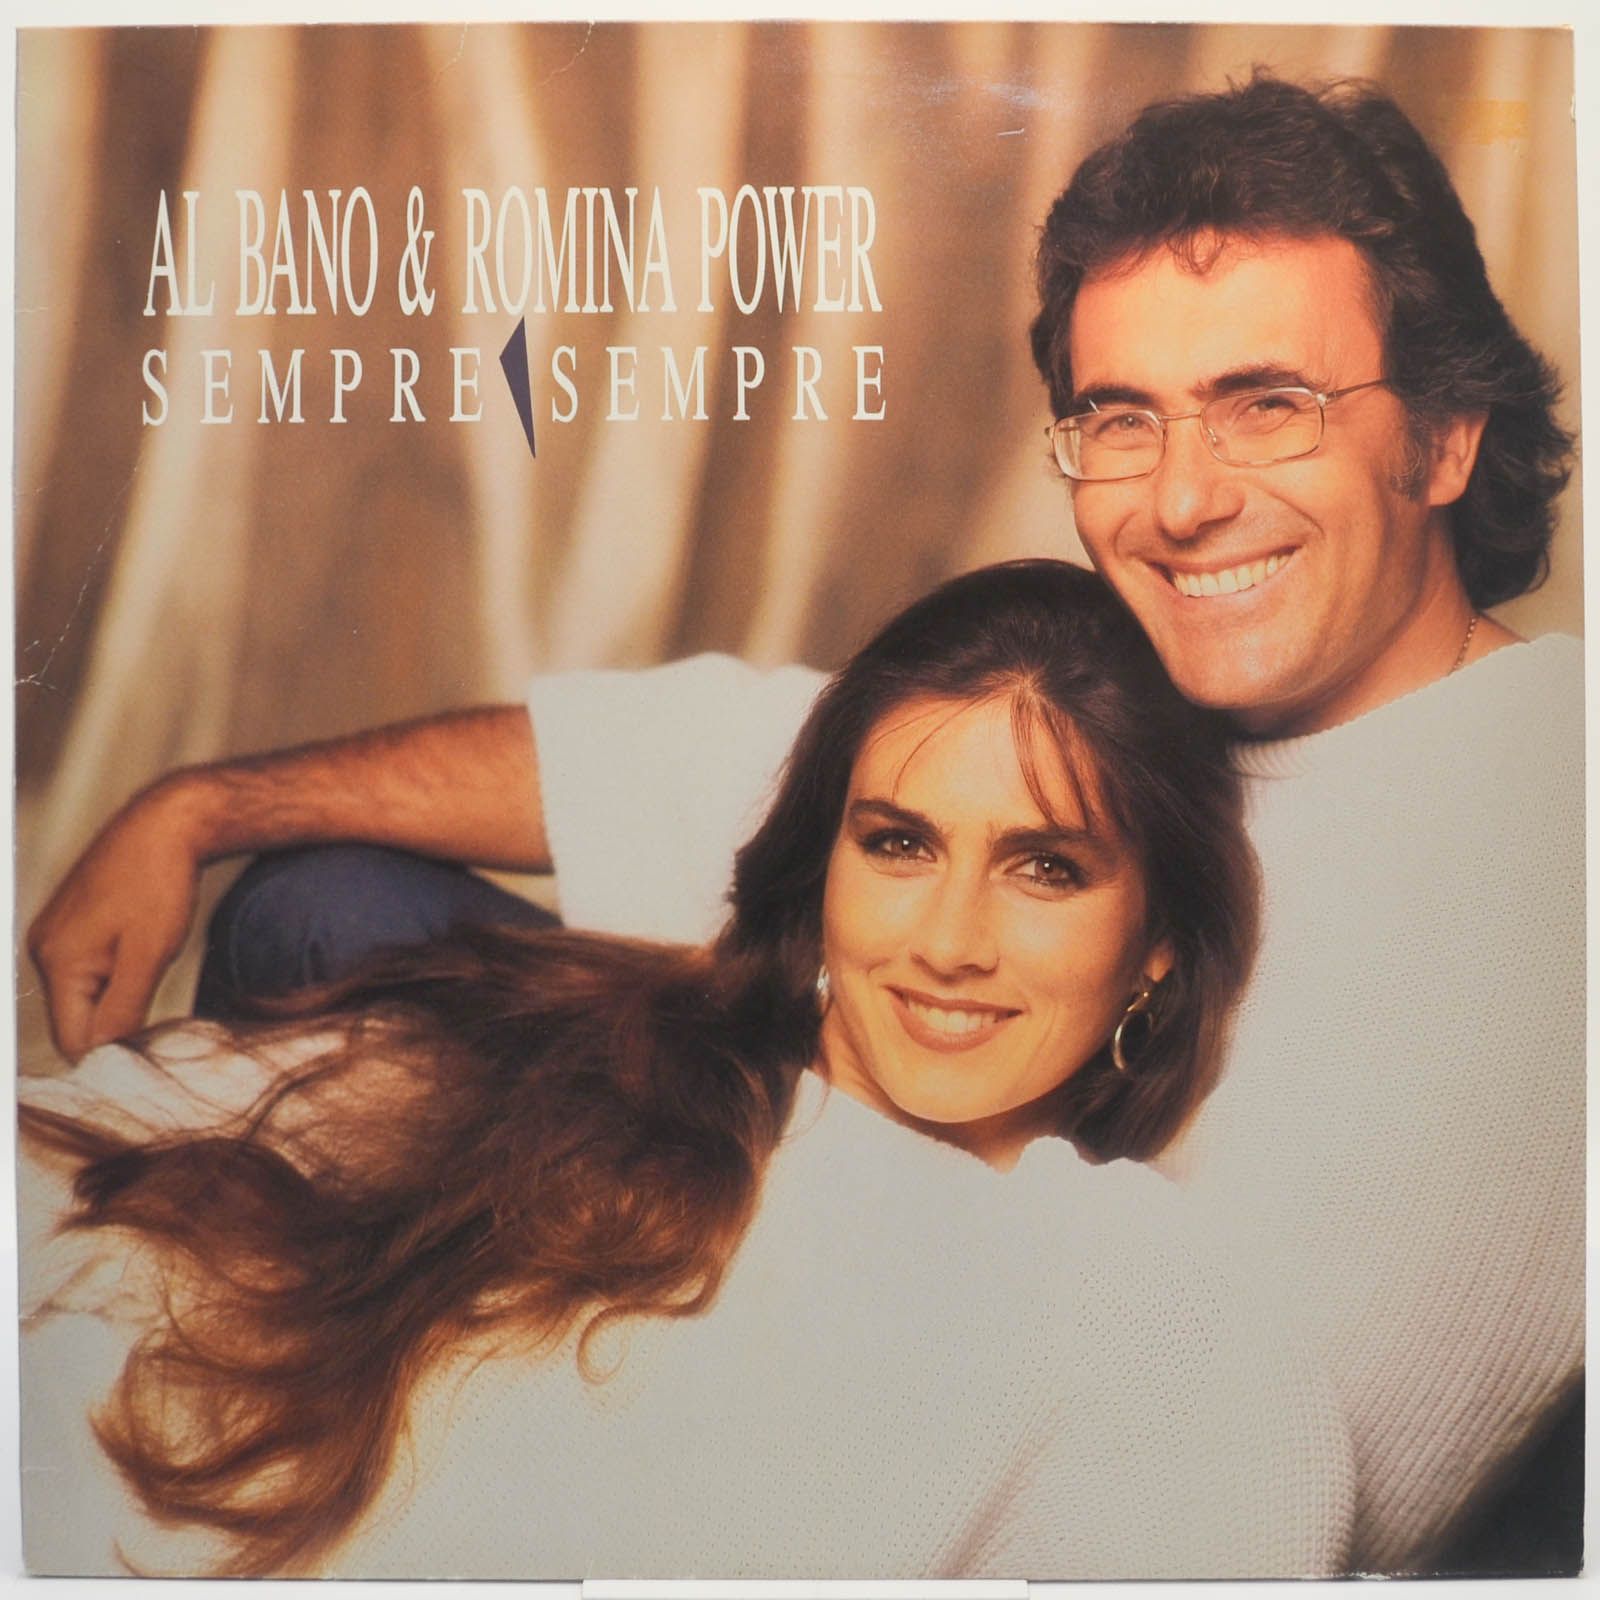 Al Bano & Romina Power — Sempre Sempre, 1986